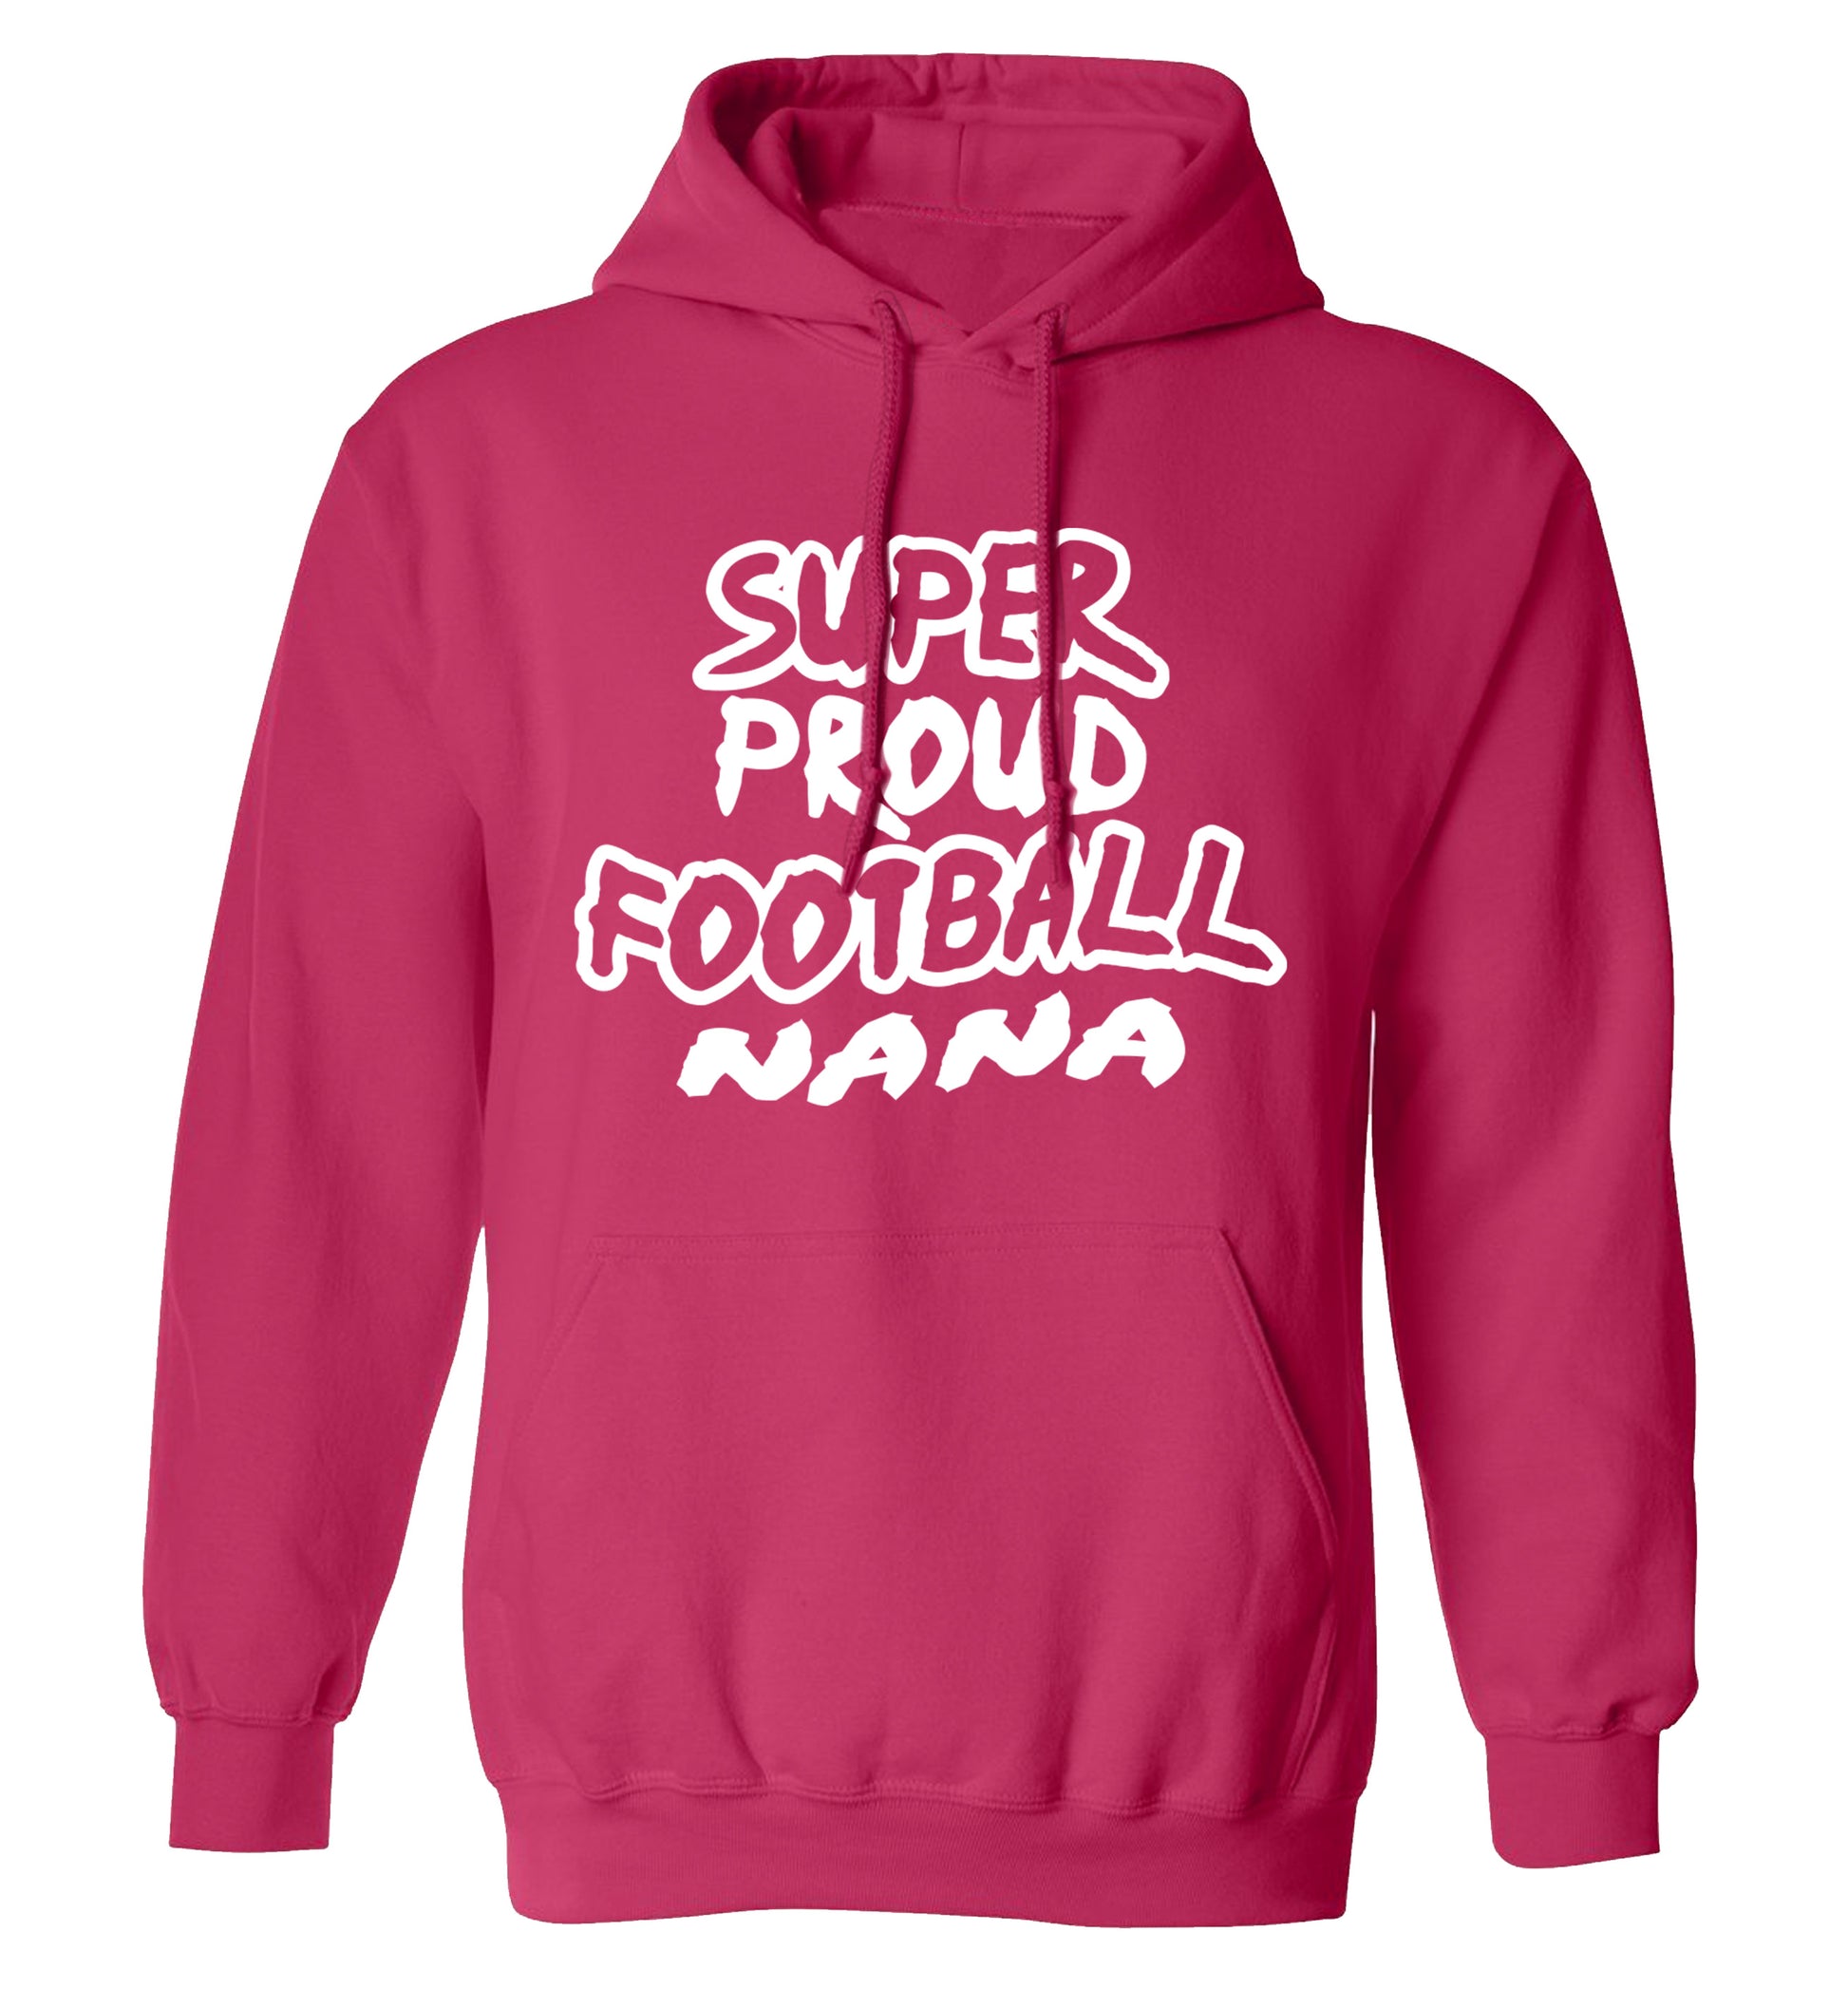 Super proud football nana adults unisexpink hoodie 2XL